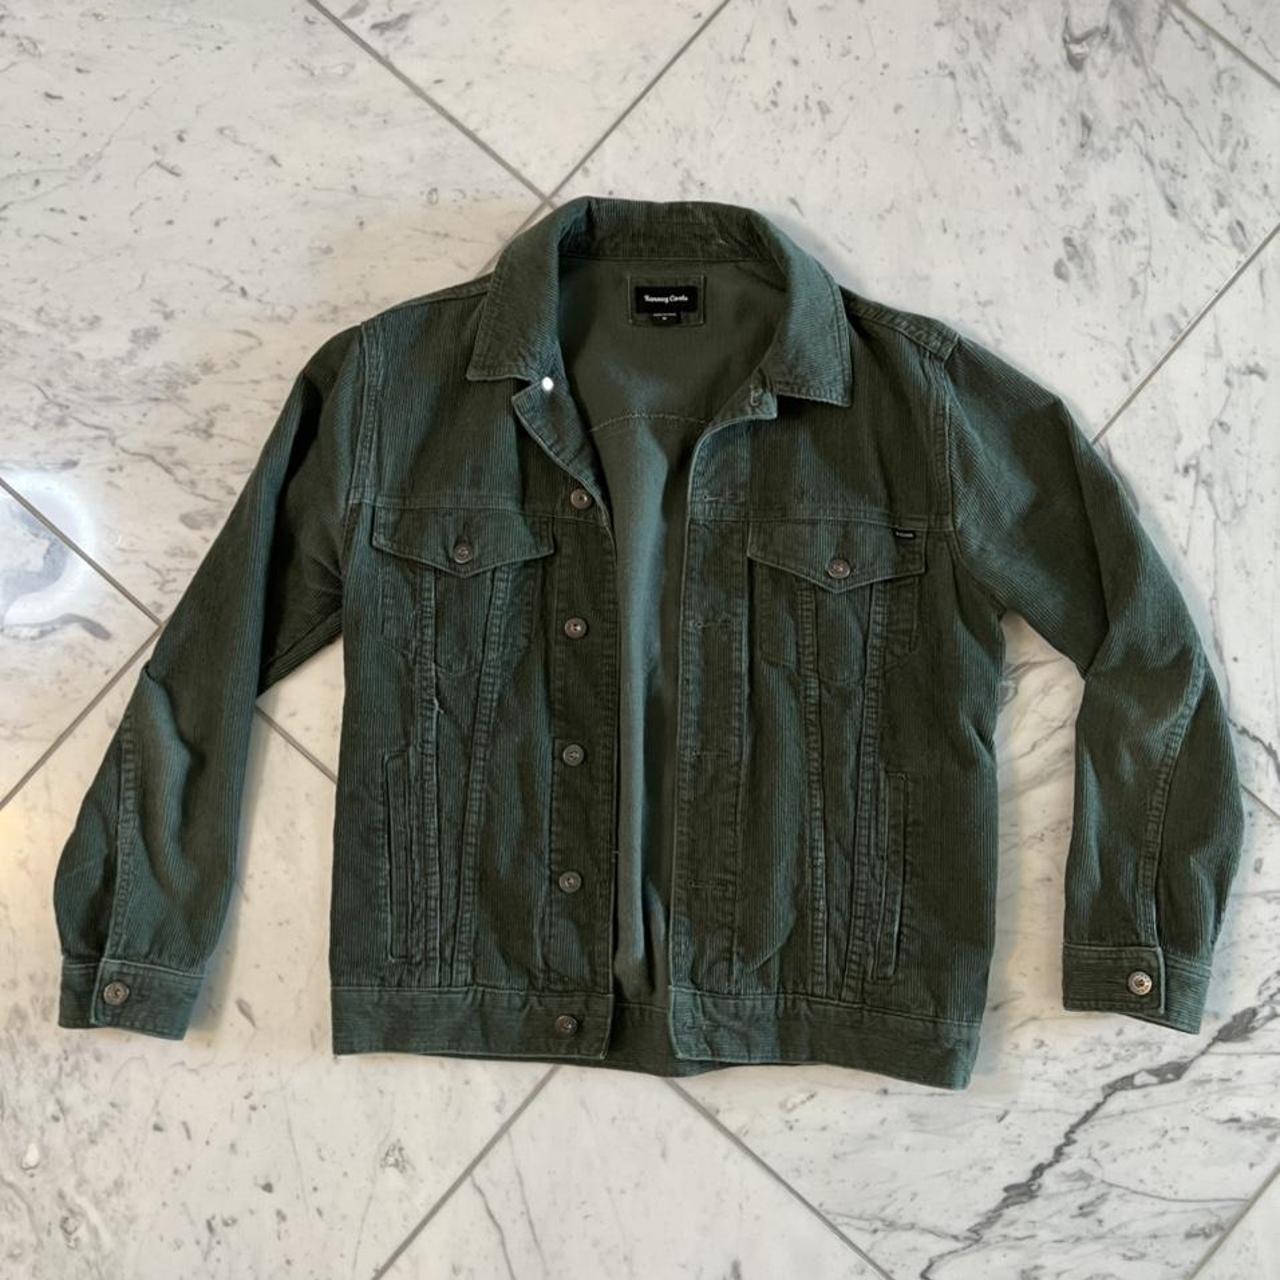 Barney Cools Men's Green and Khaki Jacket